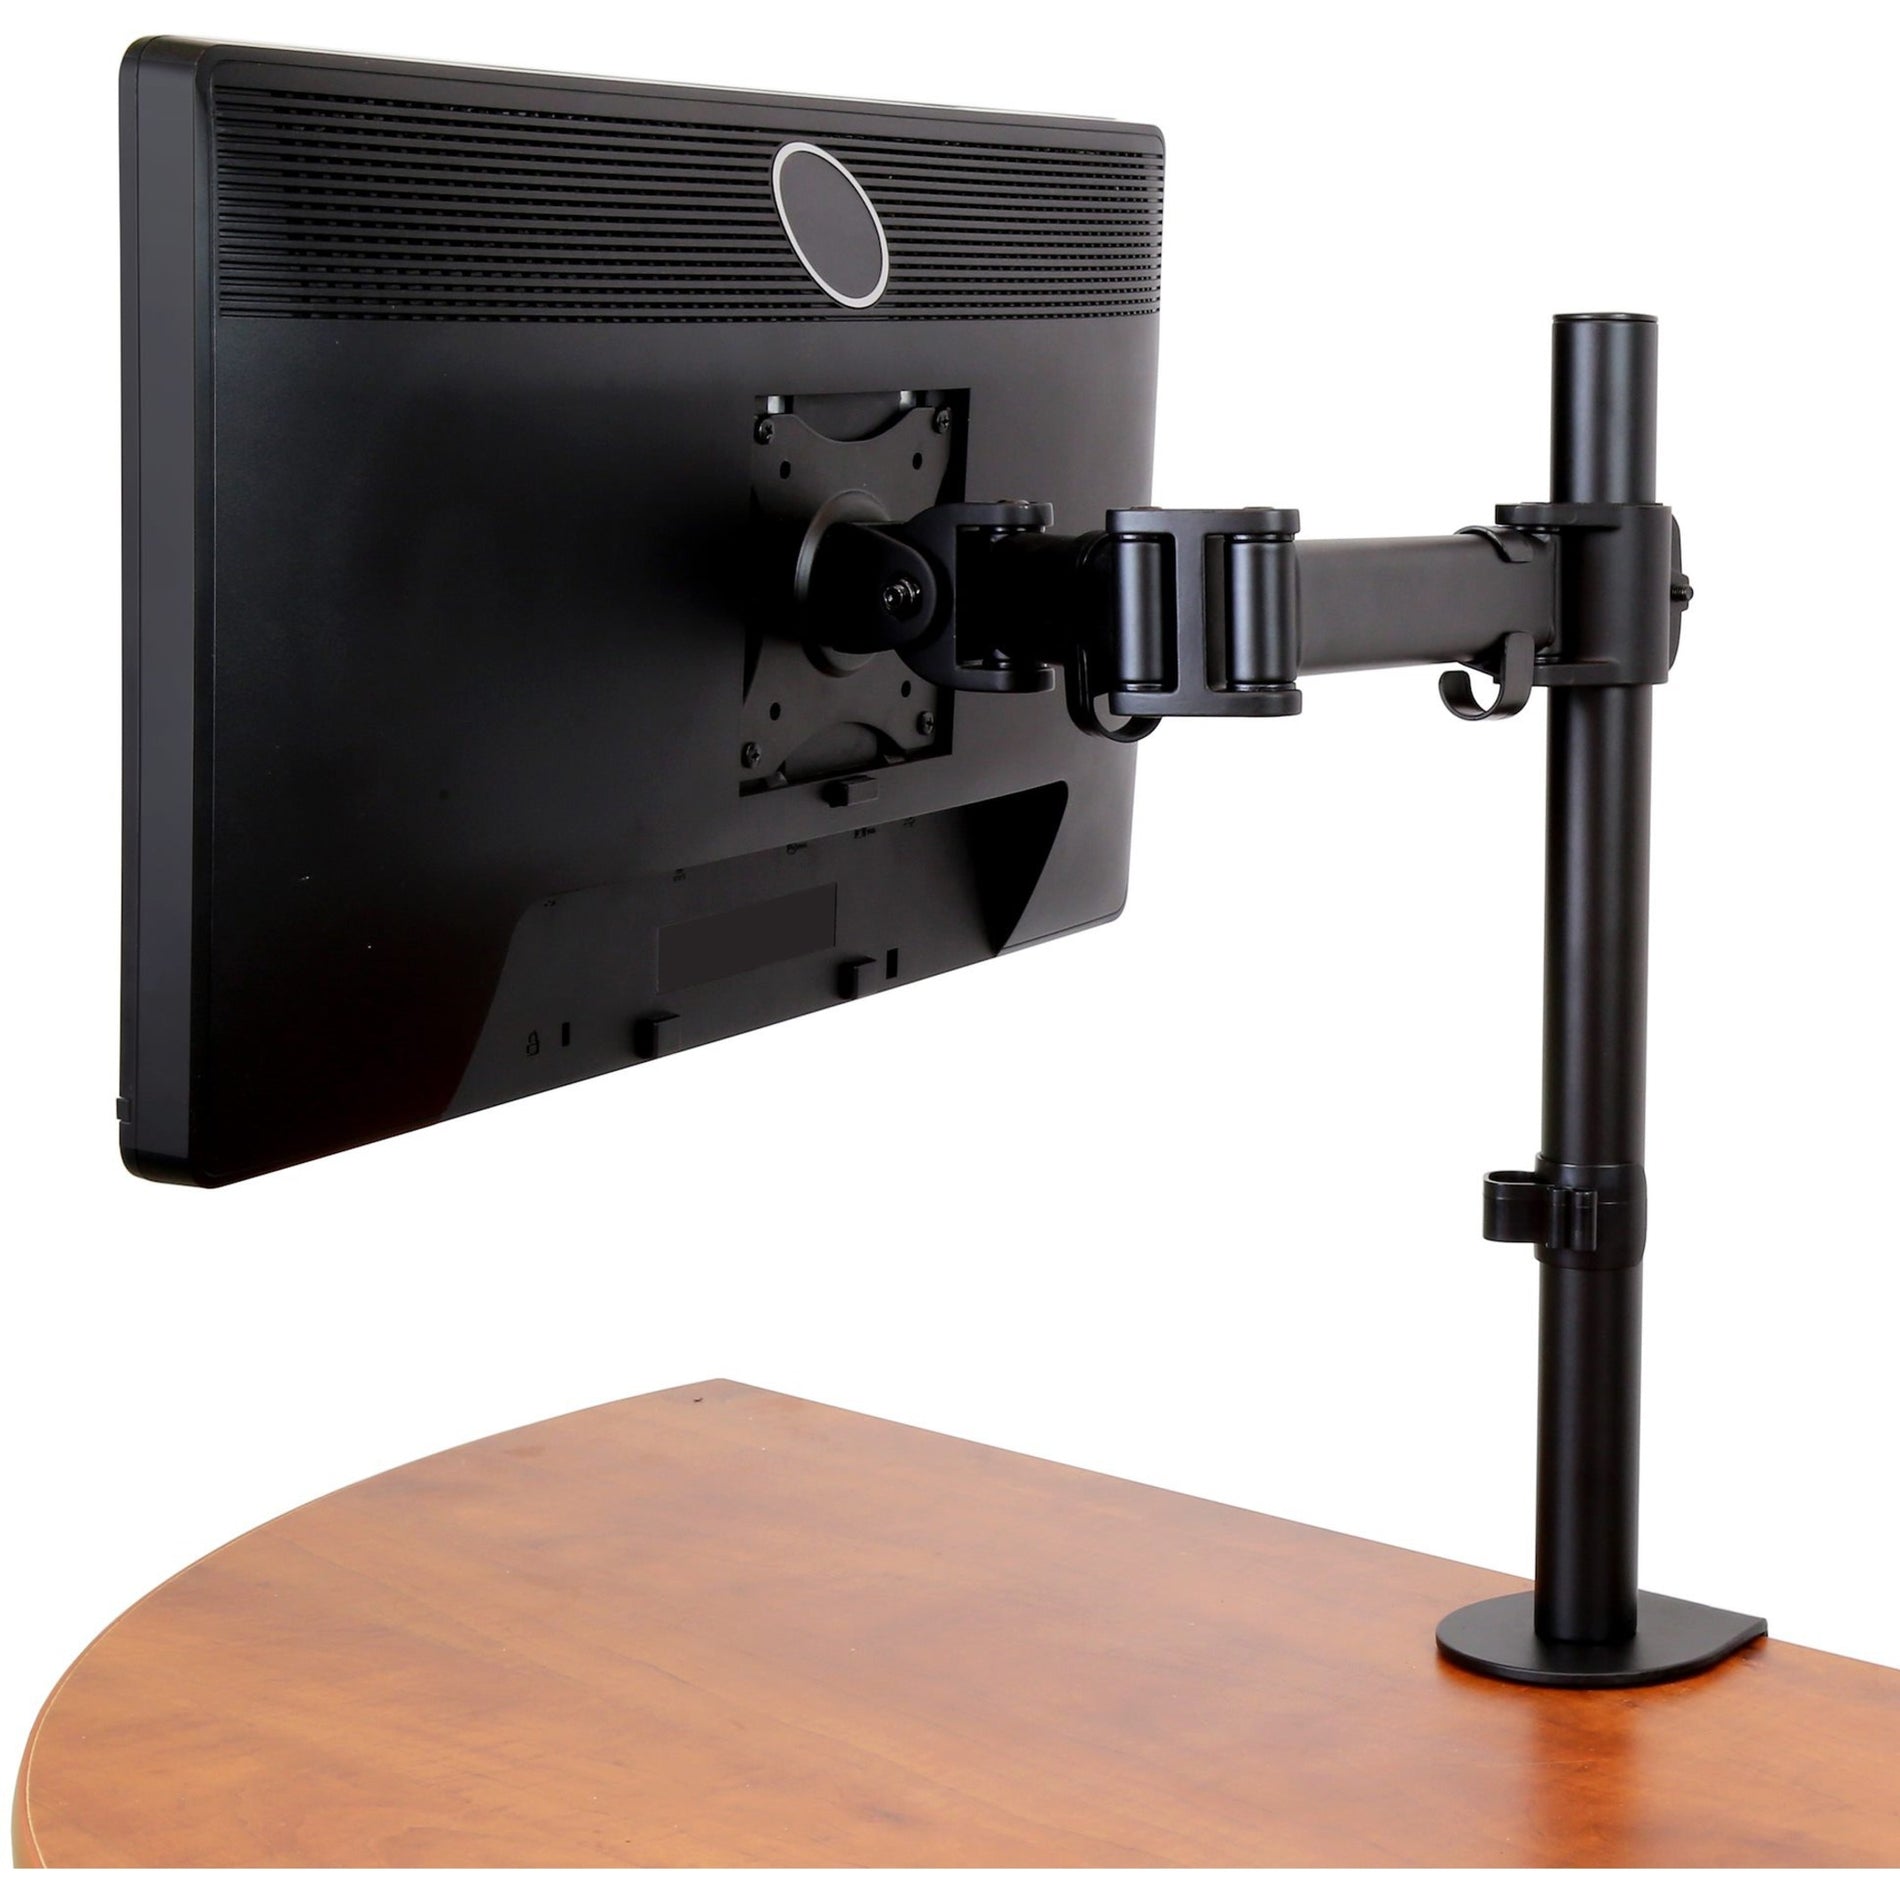 StarTech.com ARMPIVOTB Desk-Mount Monitor Arm - Articulating Arm, Heavy Duty Steel, VESA Mount, 27in, 17.6 lb/8 kg